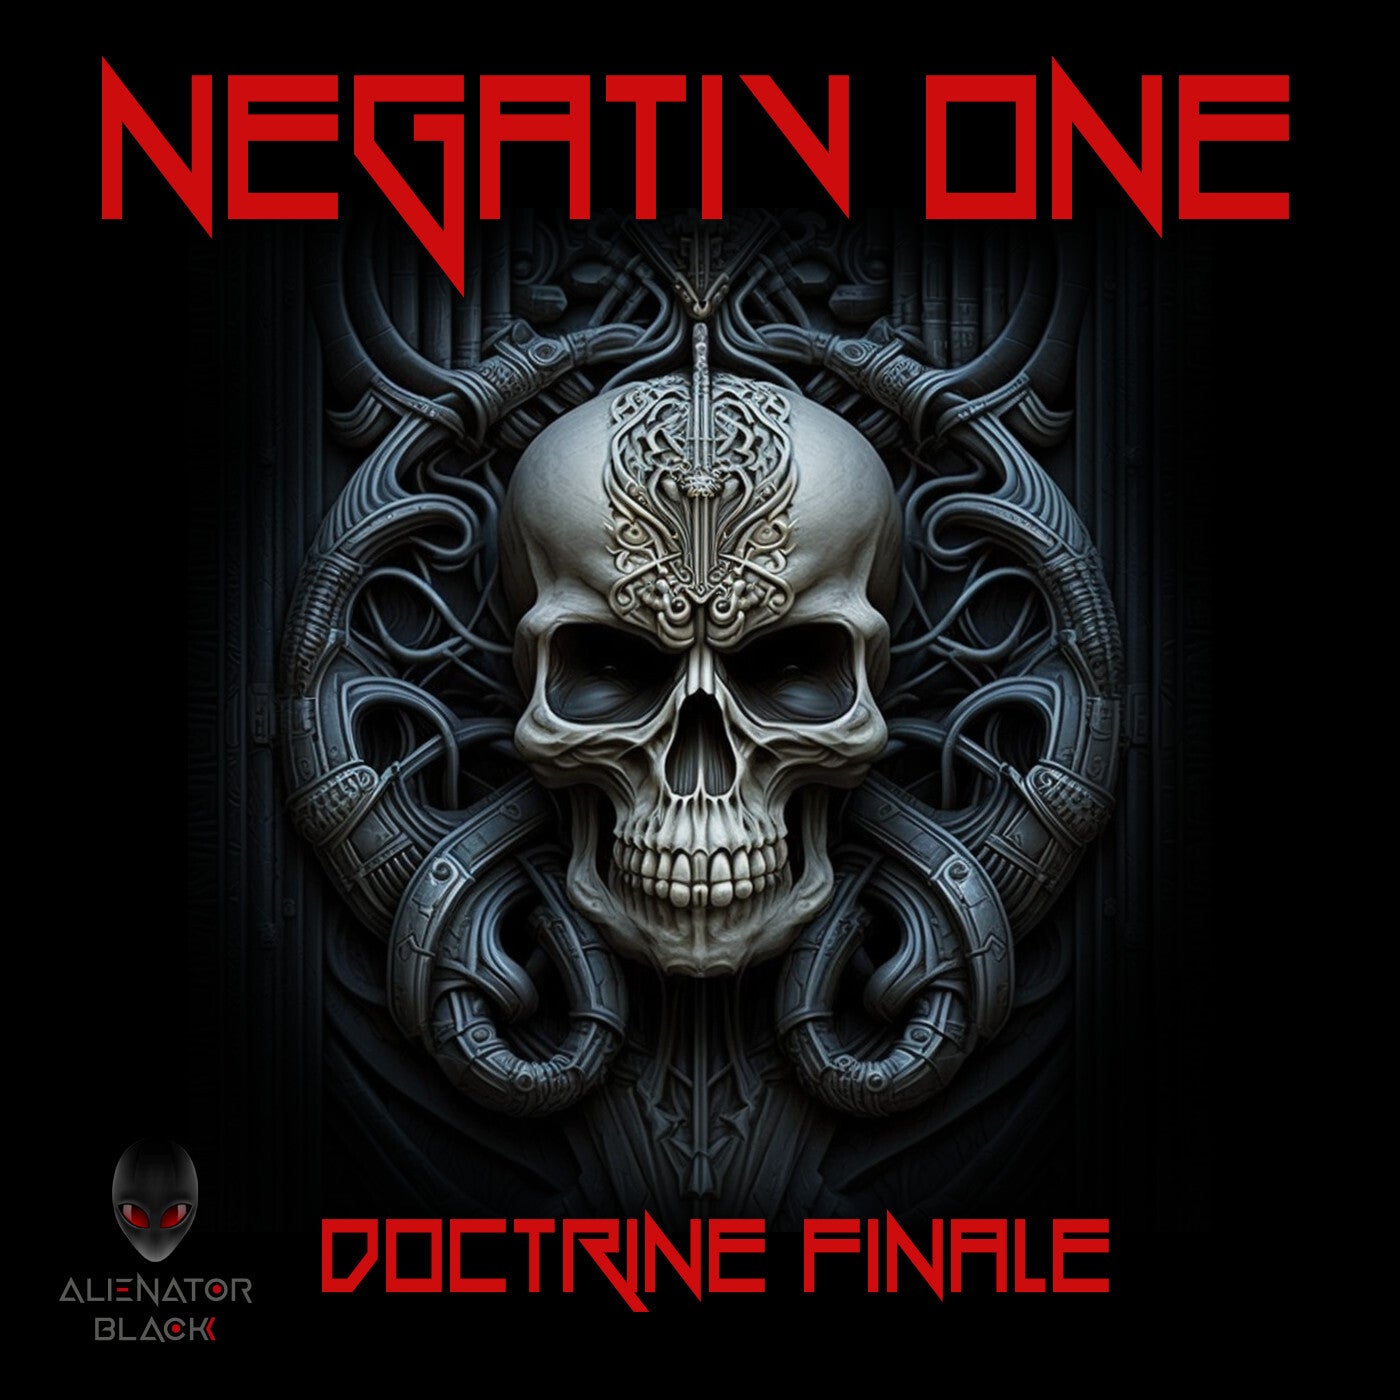 Doctrine finale